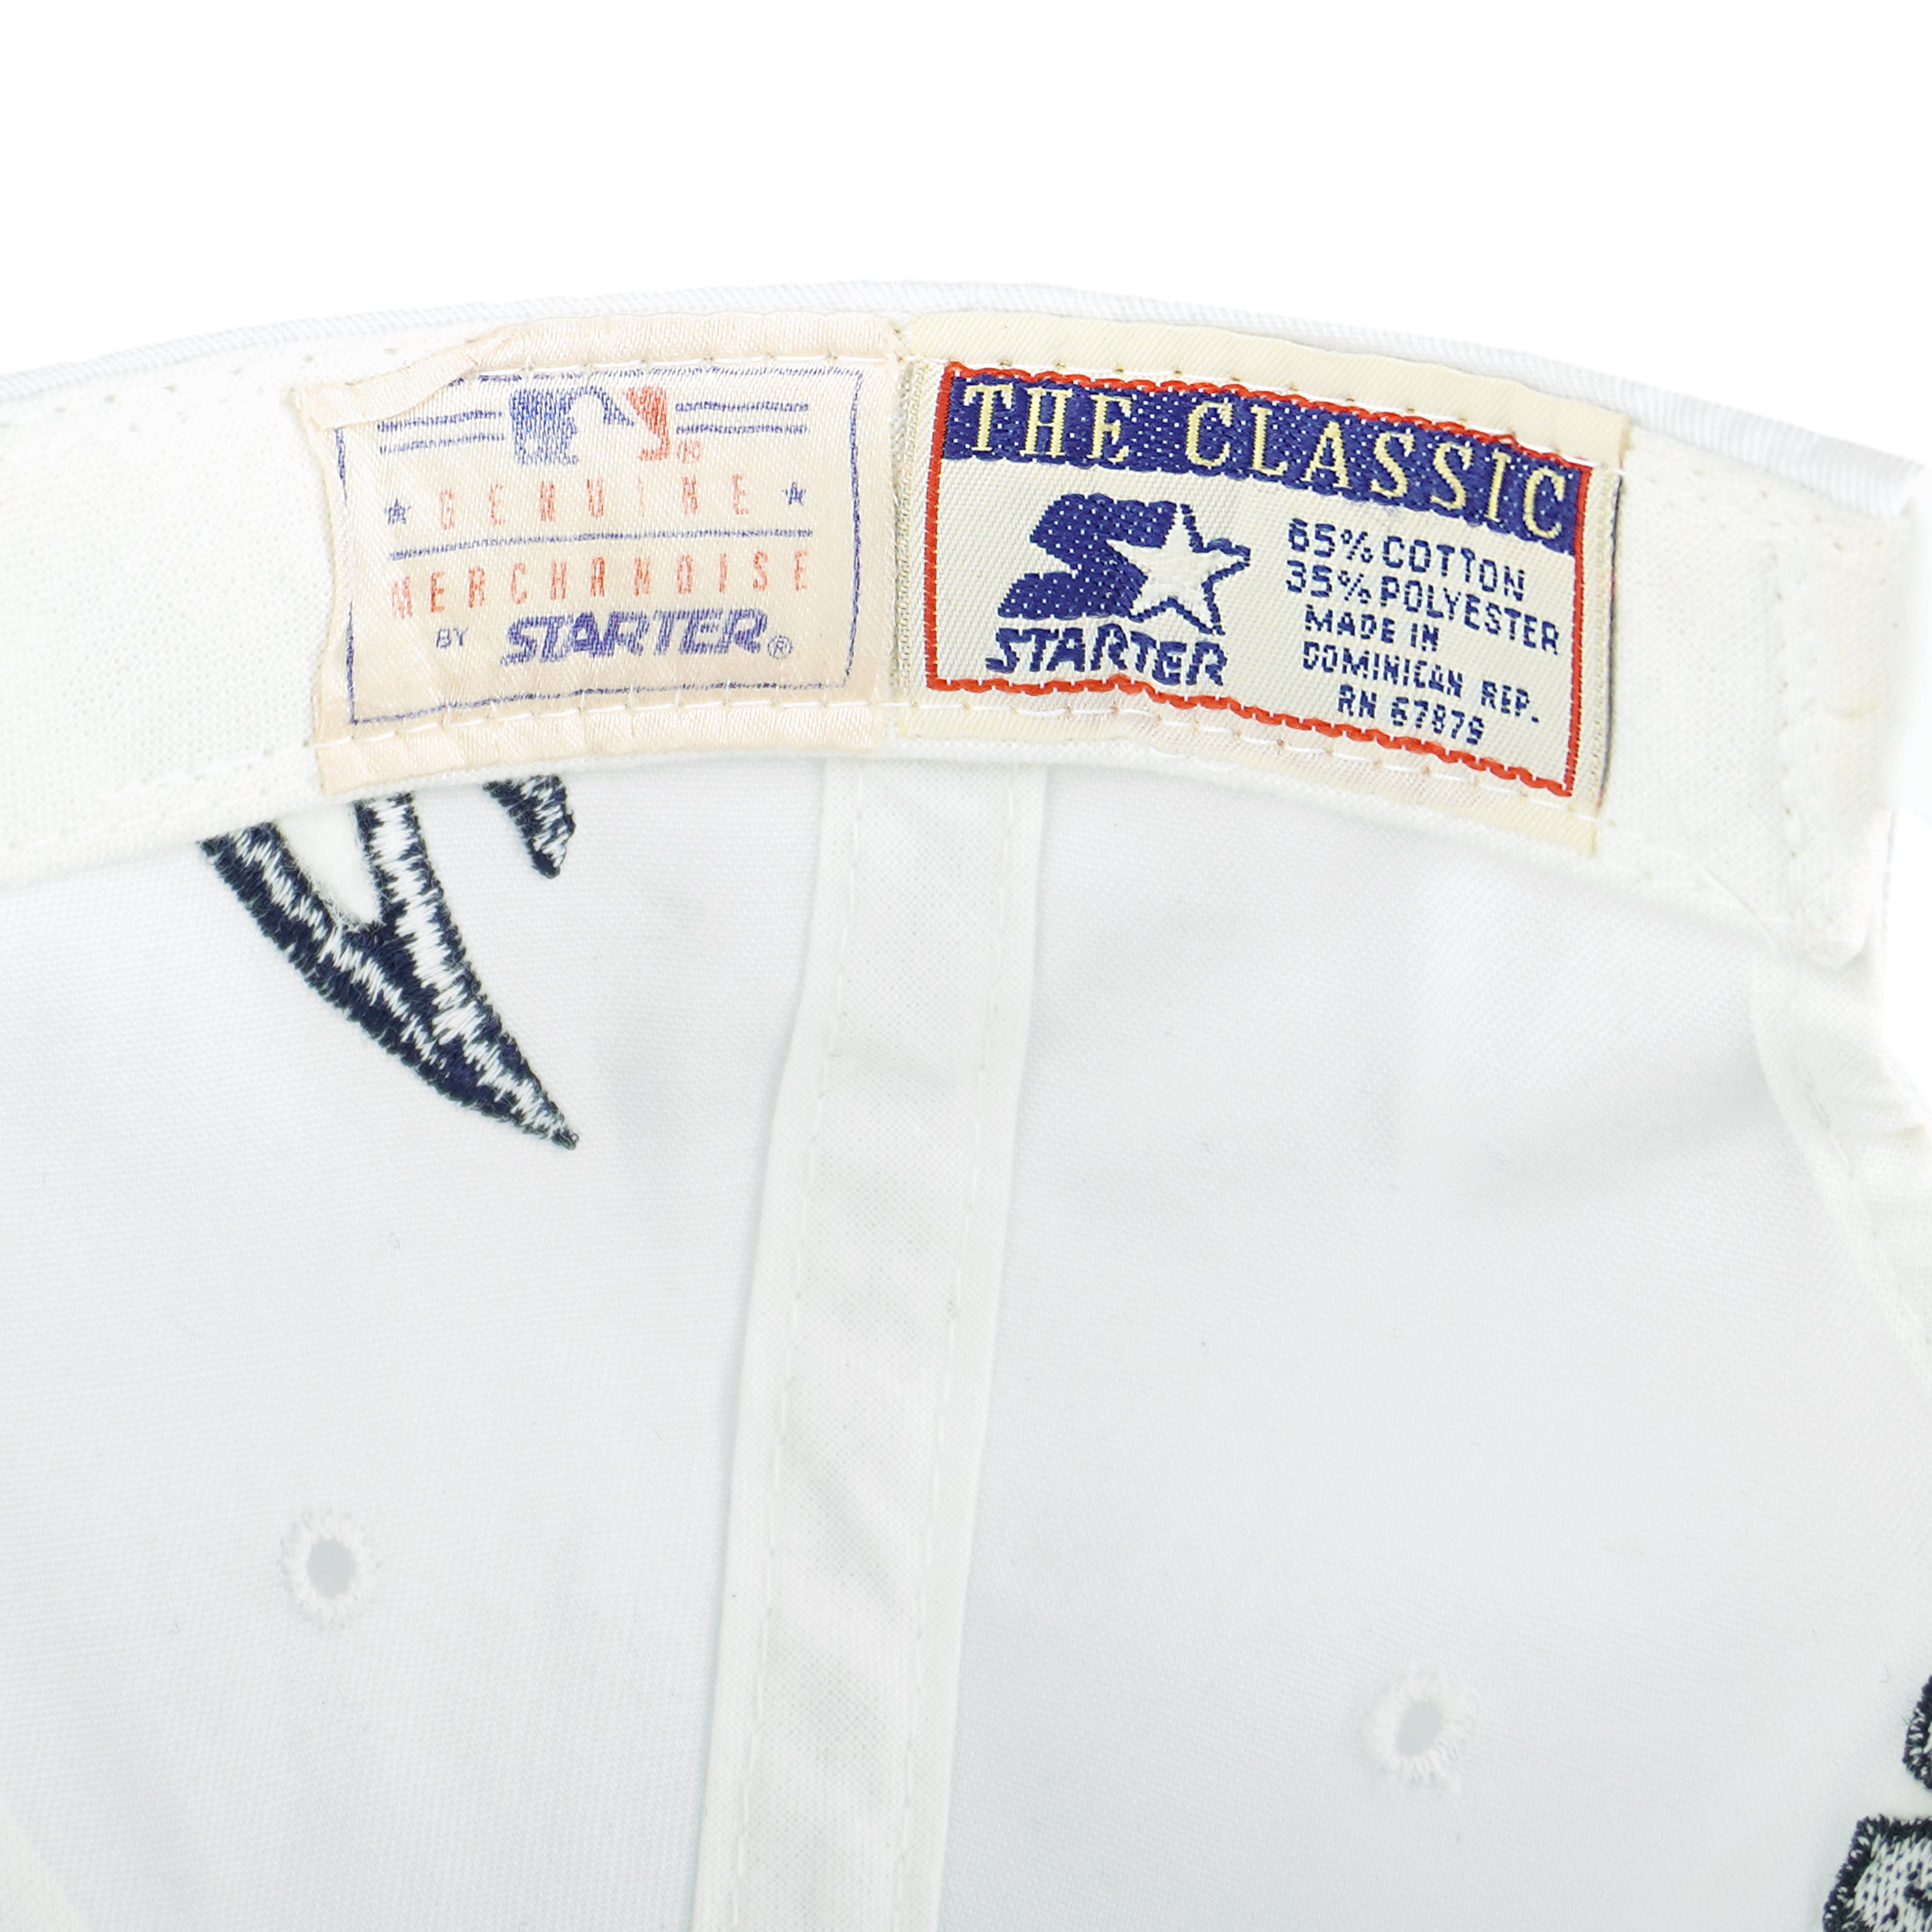 Medium. Vintage 90s Braves Satin Starter Jacket Made in Korea -  India